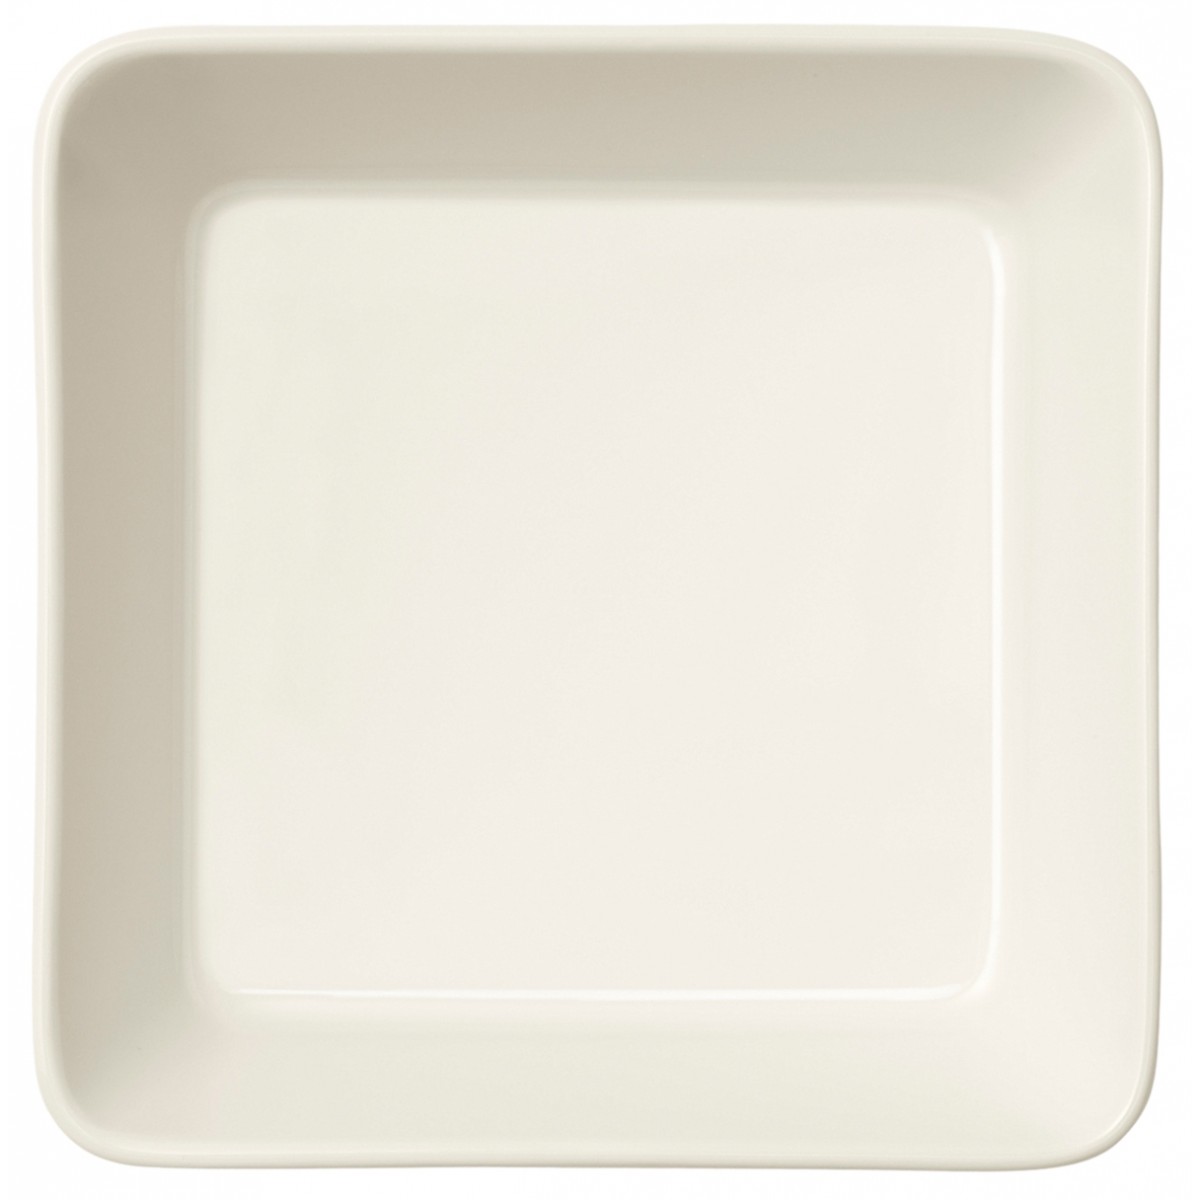 16x16cm - Teema square plate - white - 1005929